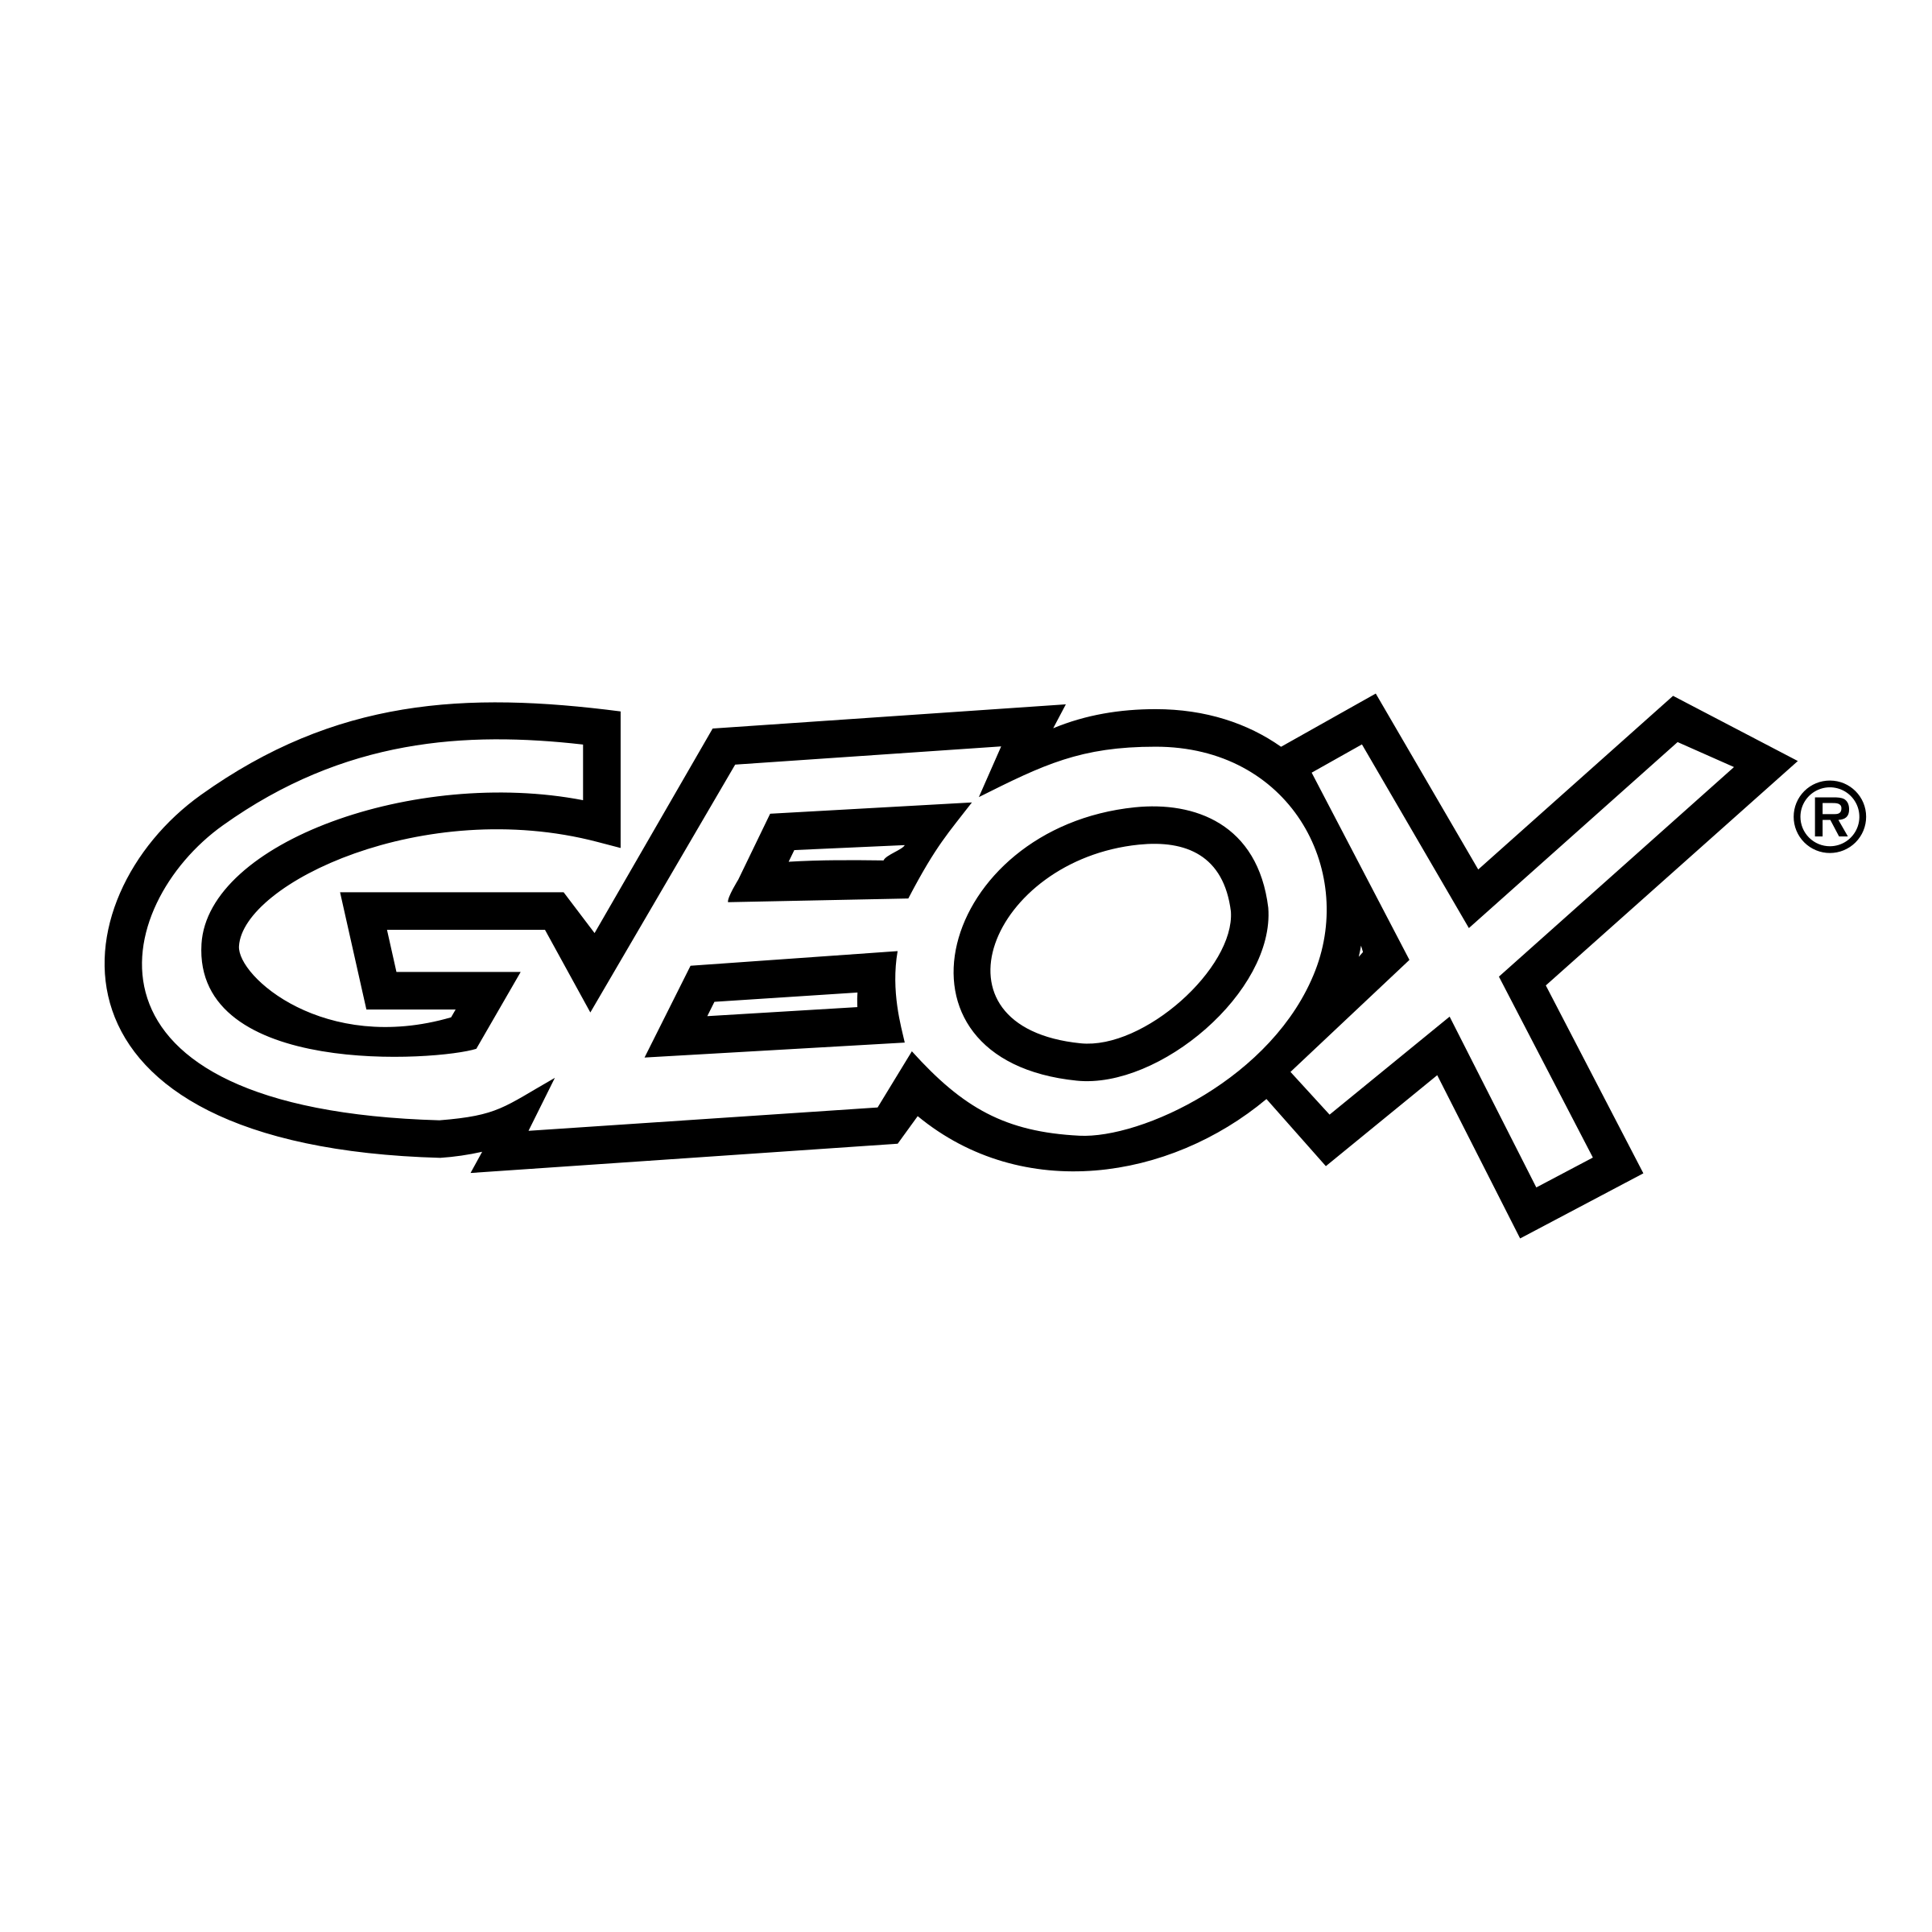 Geox Logo - Geox Logo PNG Transparent & SVG Vector - Freebie Supply